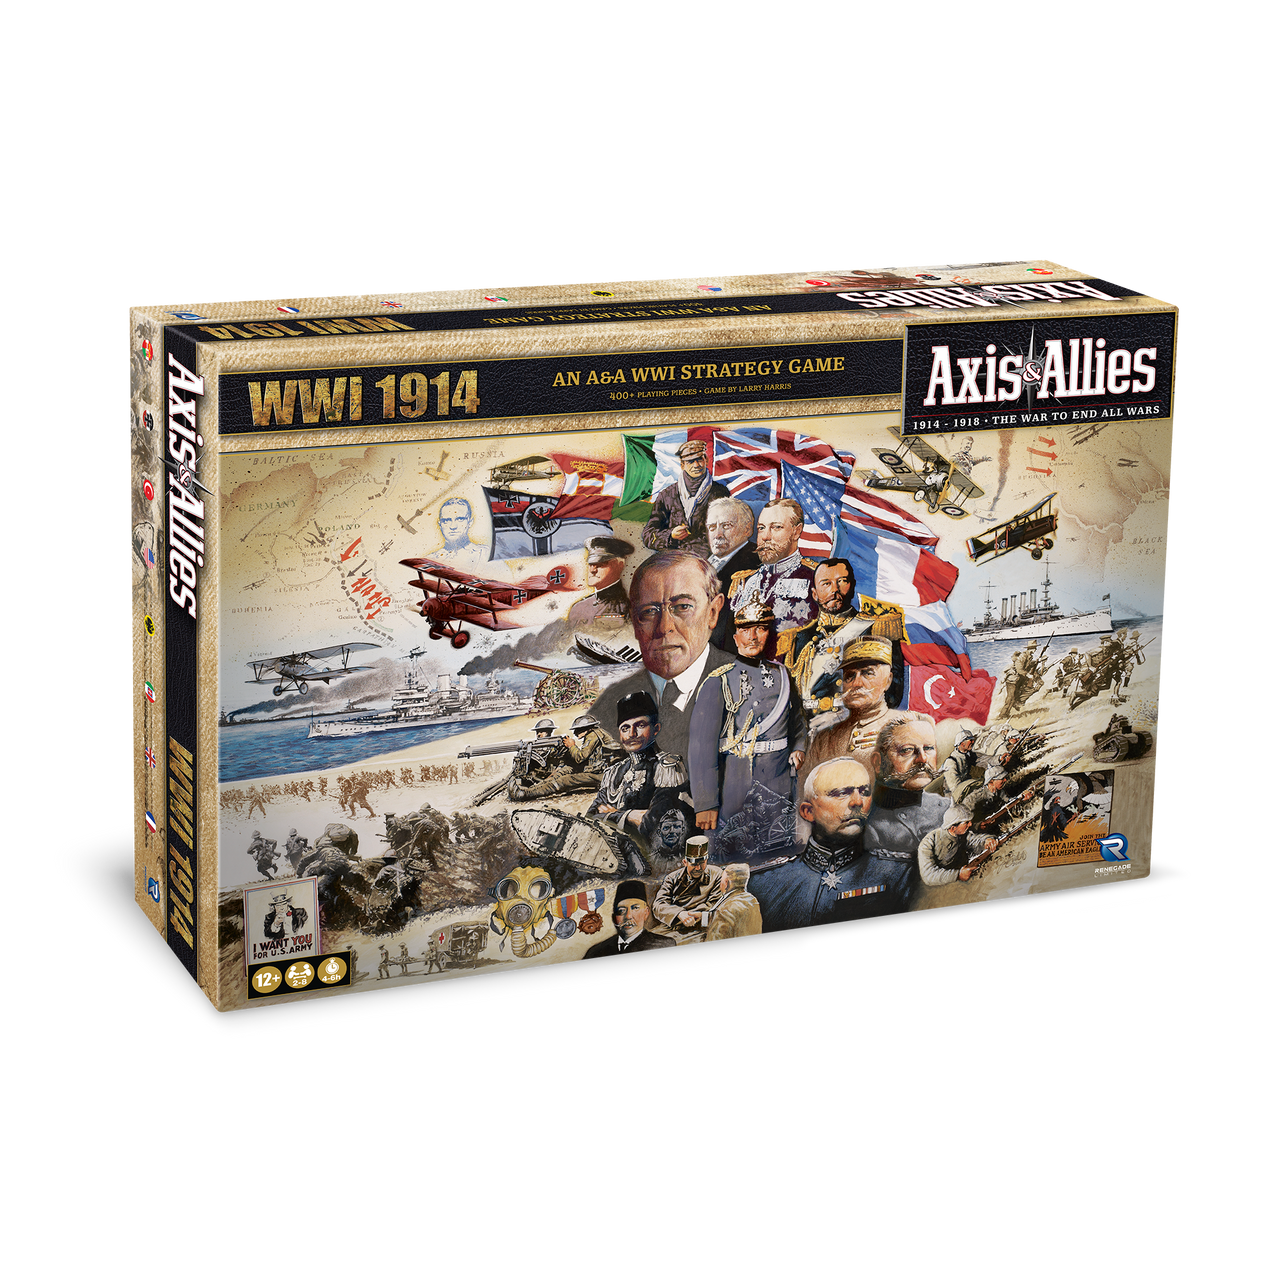 Axis & Allies: WWI 1914 box